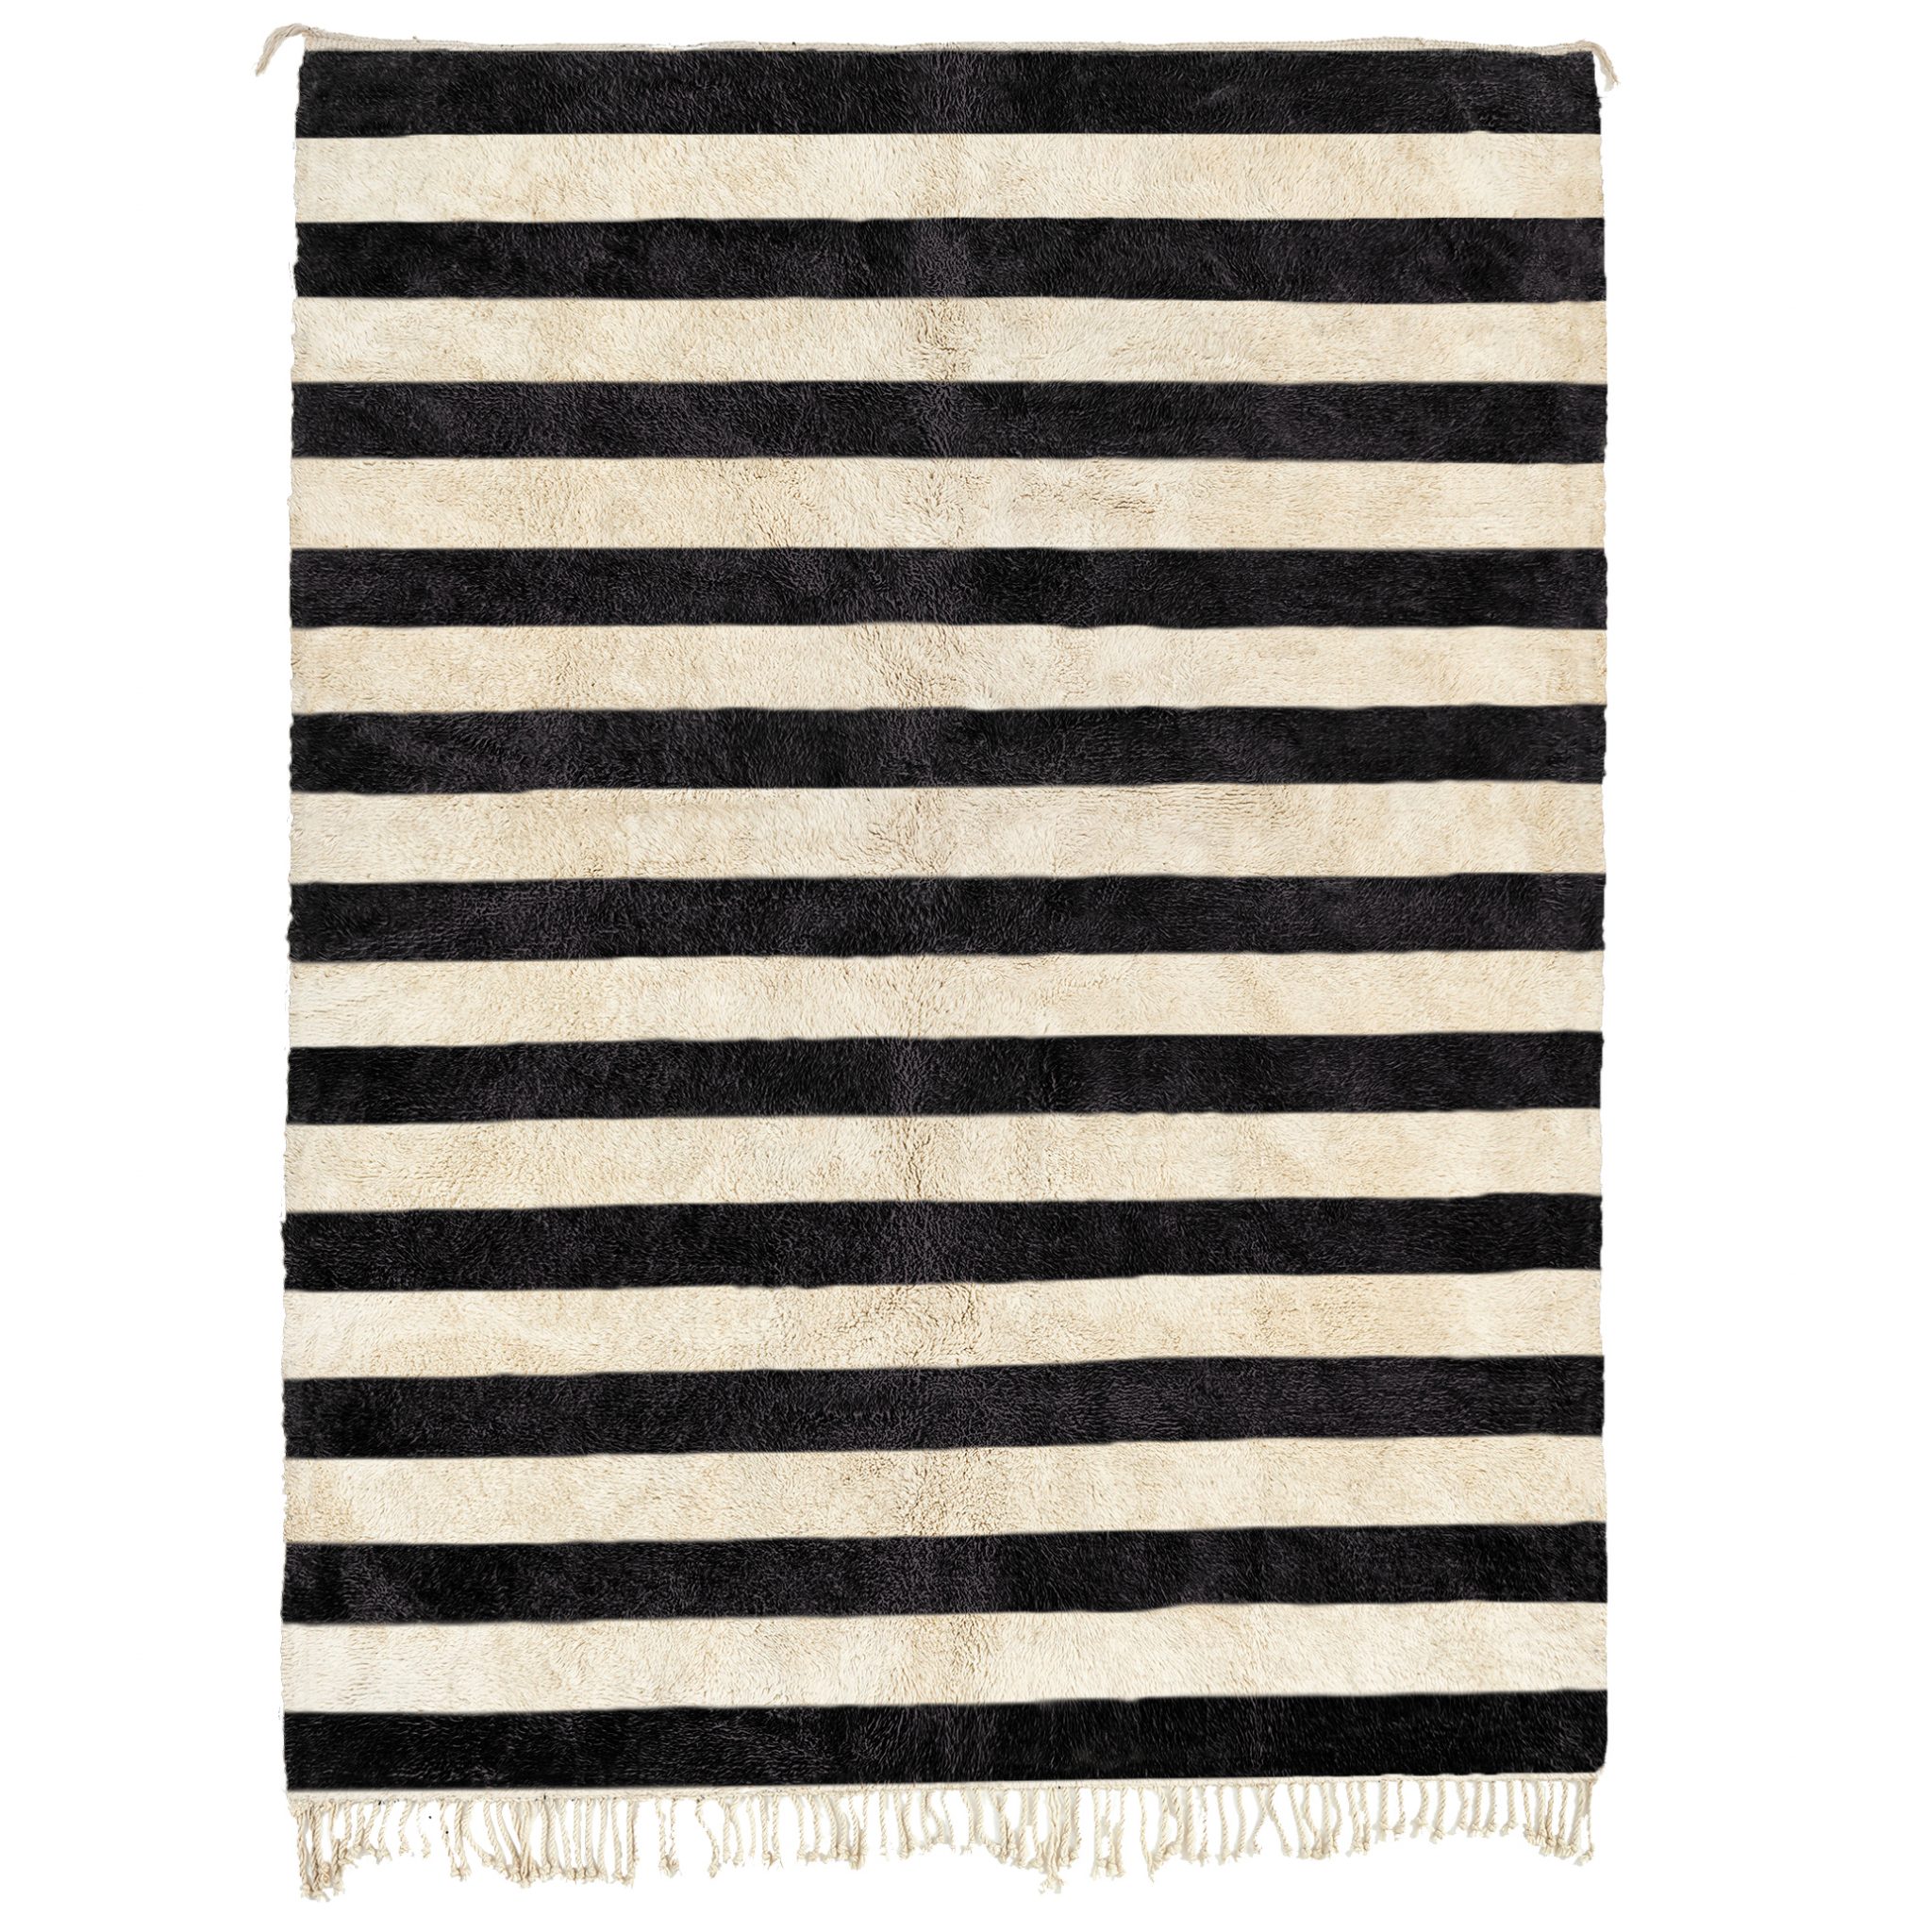 https://moroccan-carpet.com/shop/berber-rug/black-modern-moroccan-rug-contemporary-art-30/